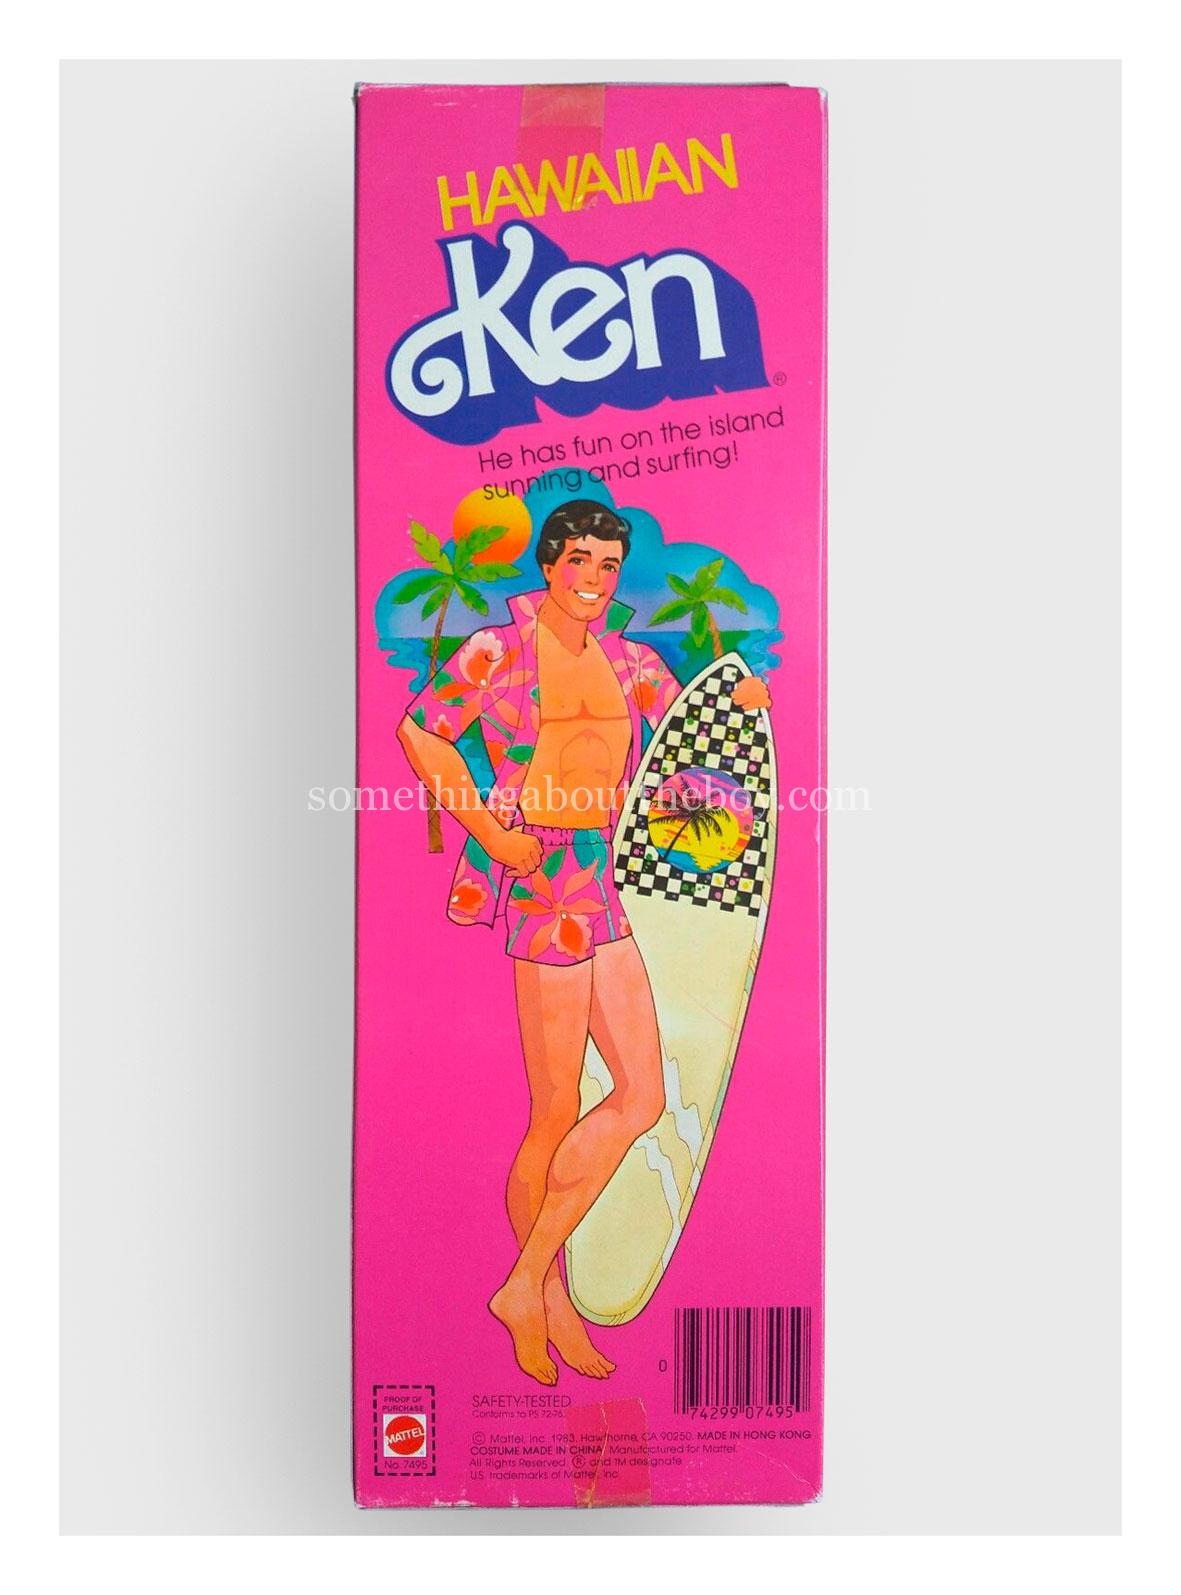 1984 #7495 Hawaiian Ken original packaging